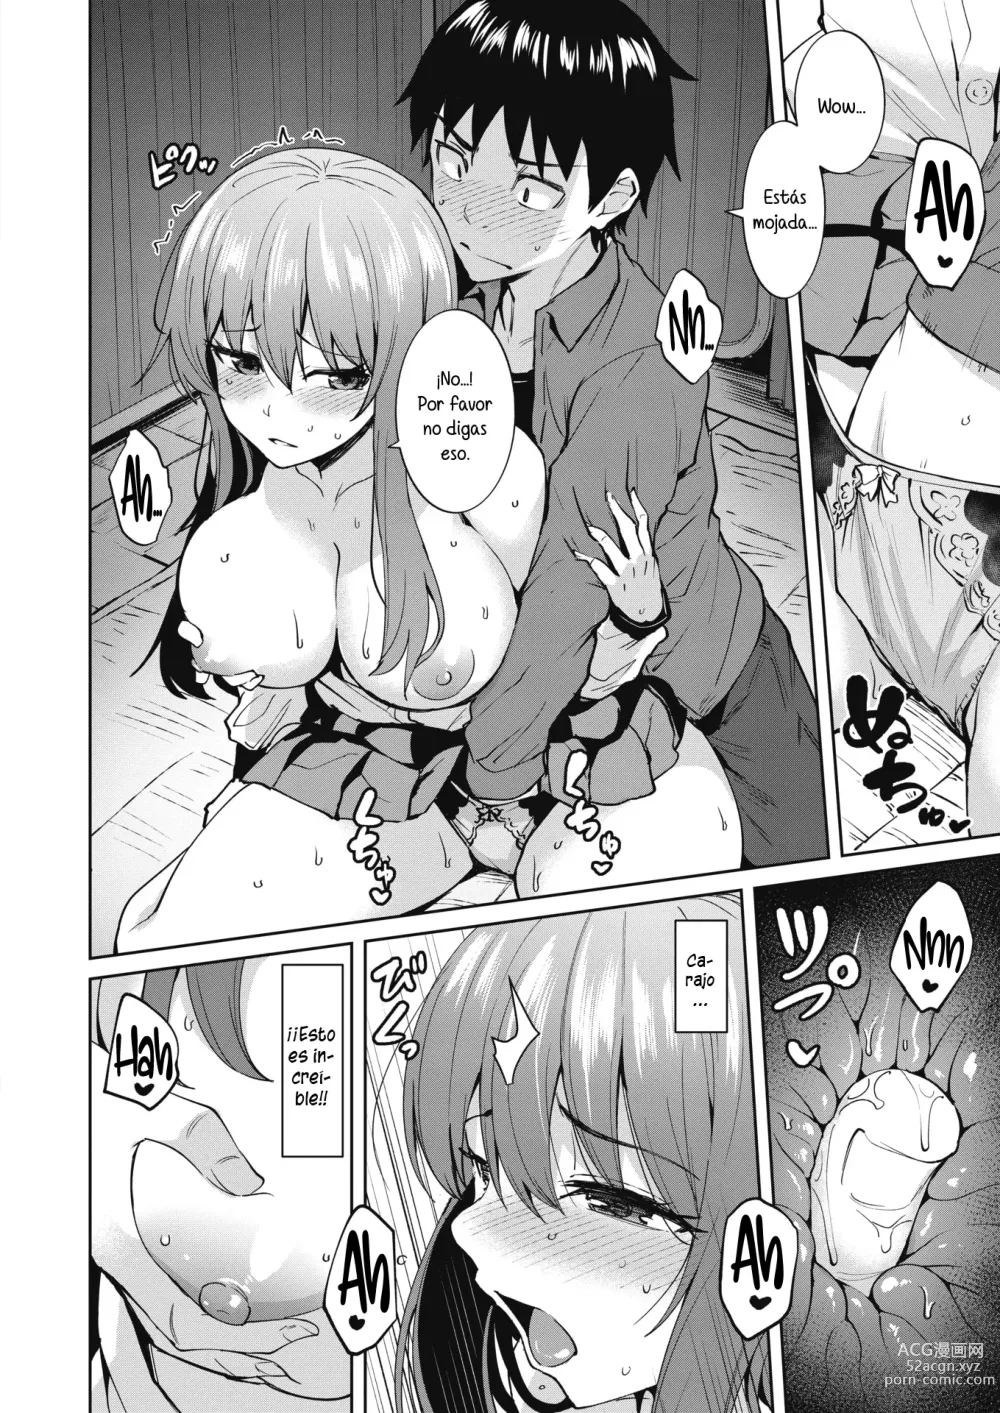 Page 10 of manga Dore ni Suru? - Which ecstasy do you want?